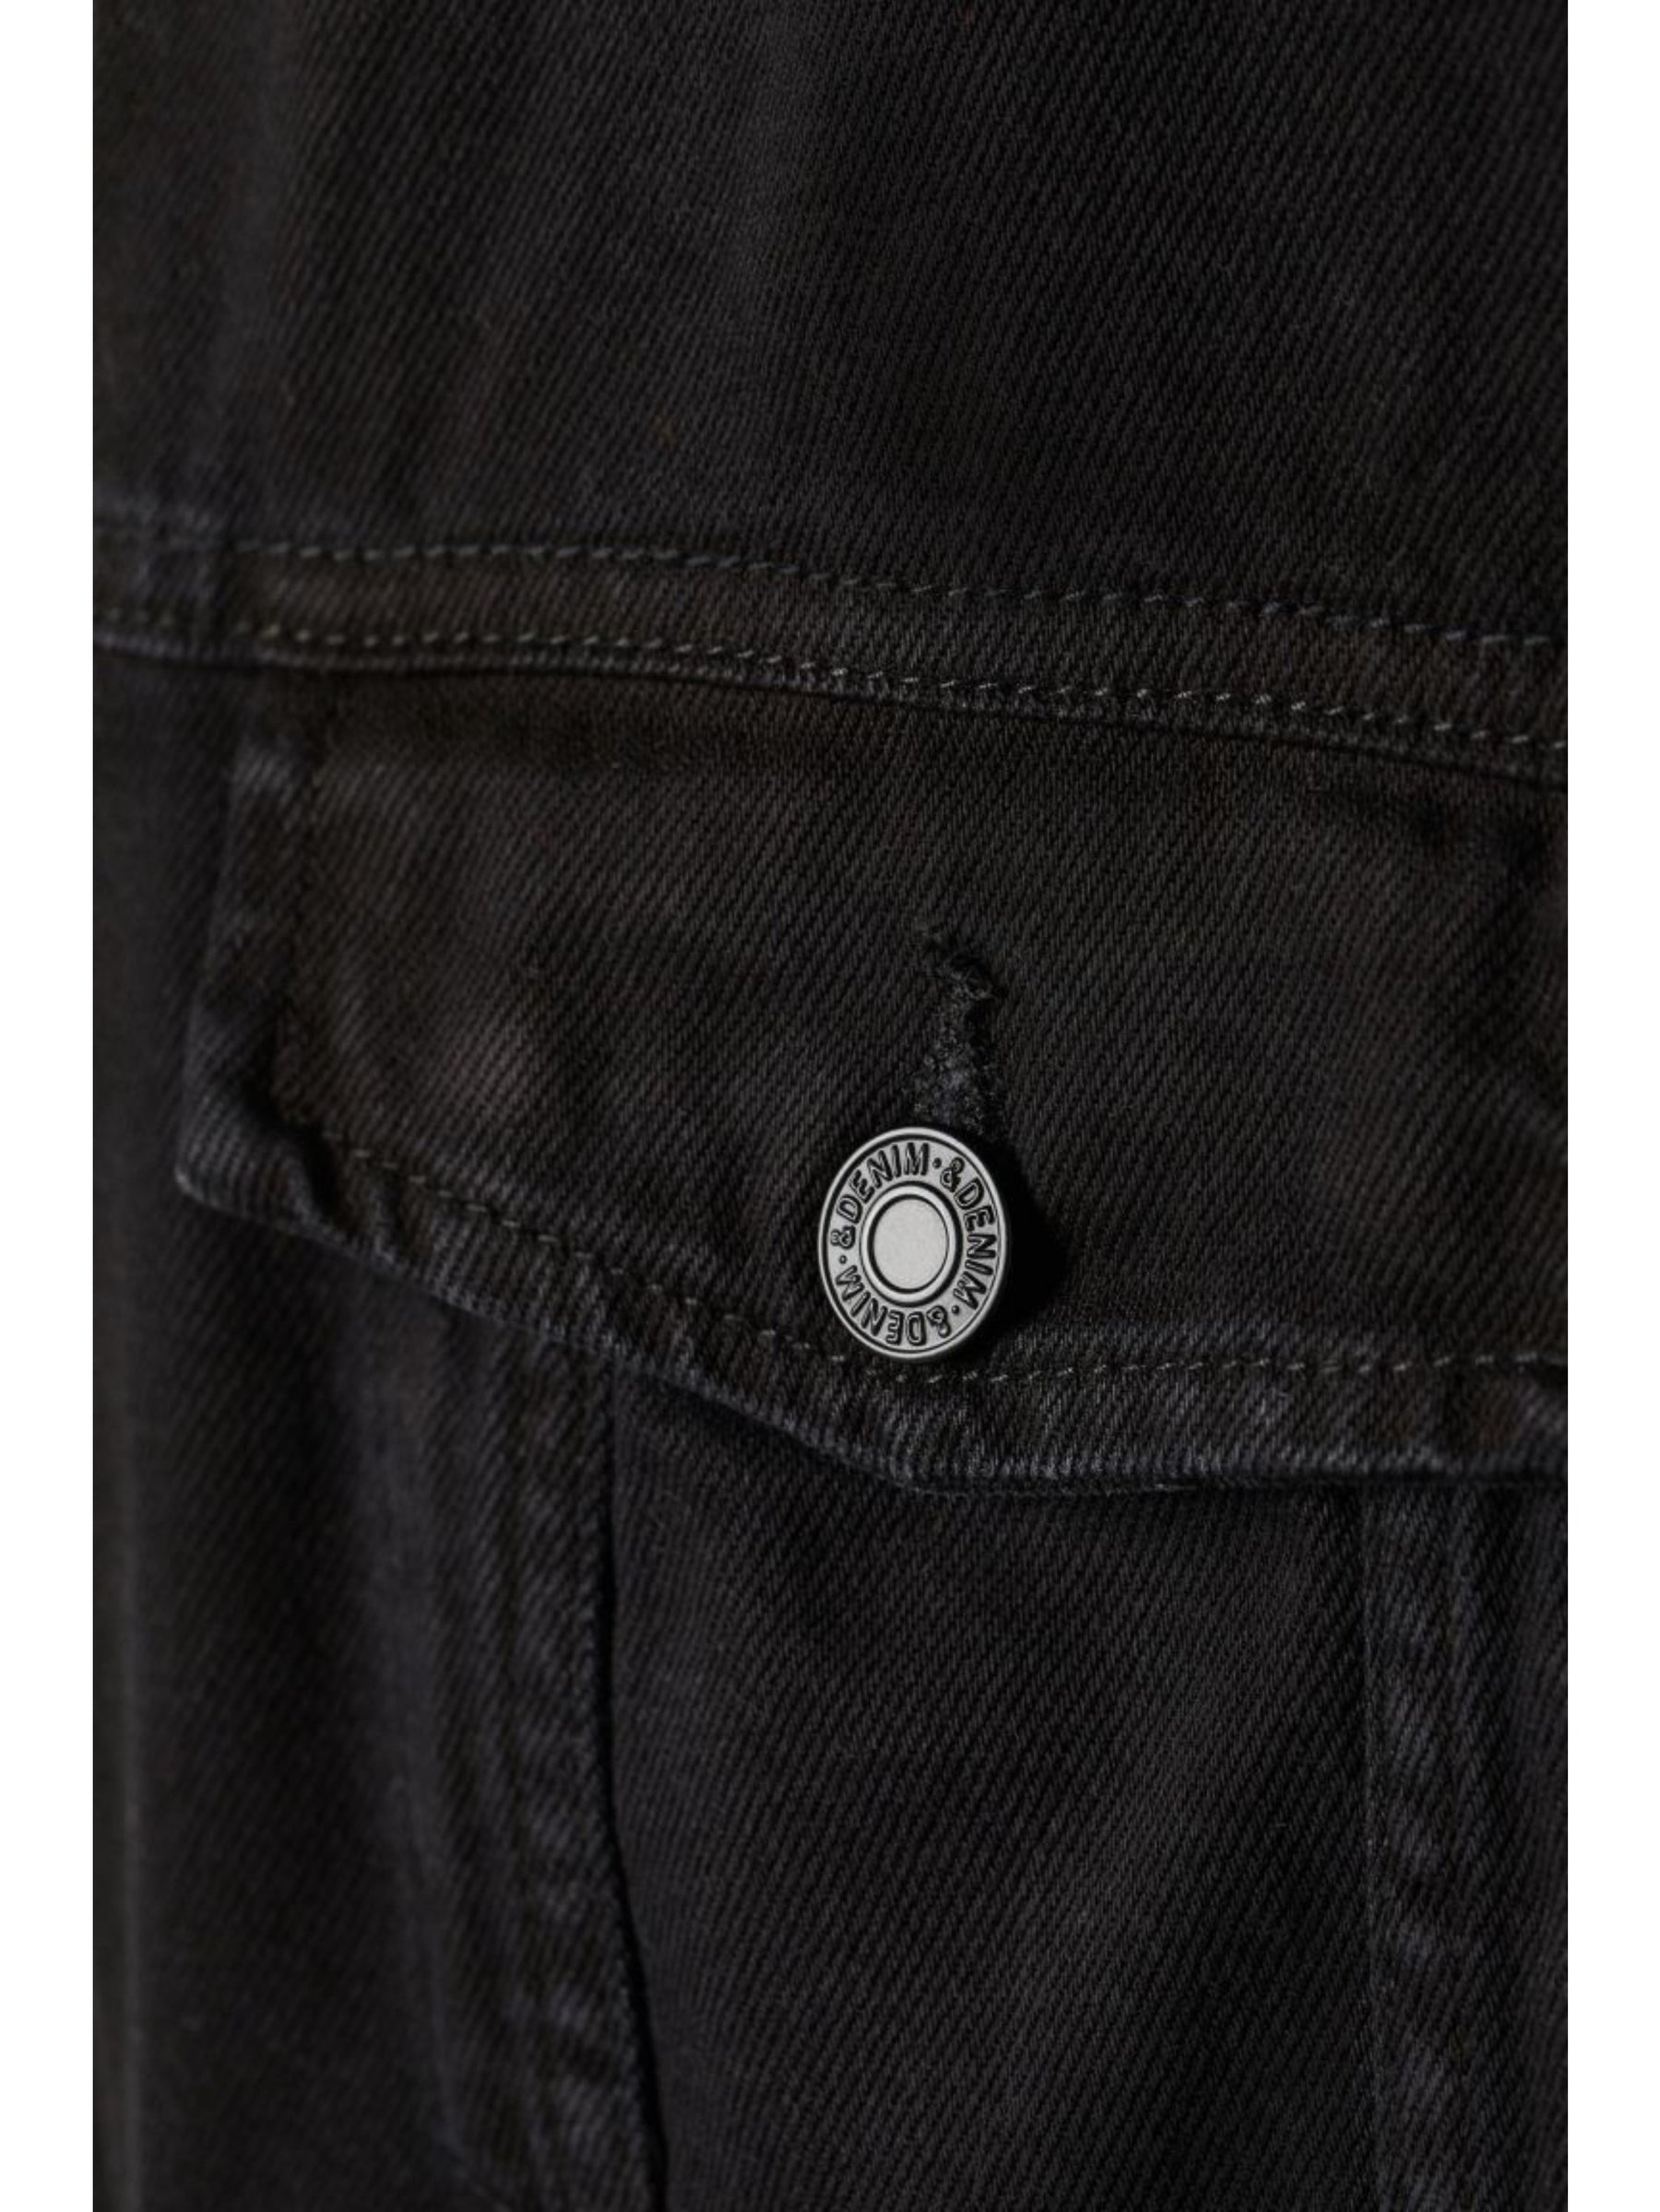 HM JACKET Mens Casual Cotton Button Up Denim Jacket GUEST BRAND RAWDENIM